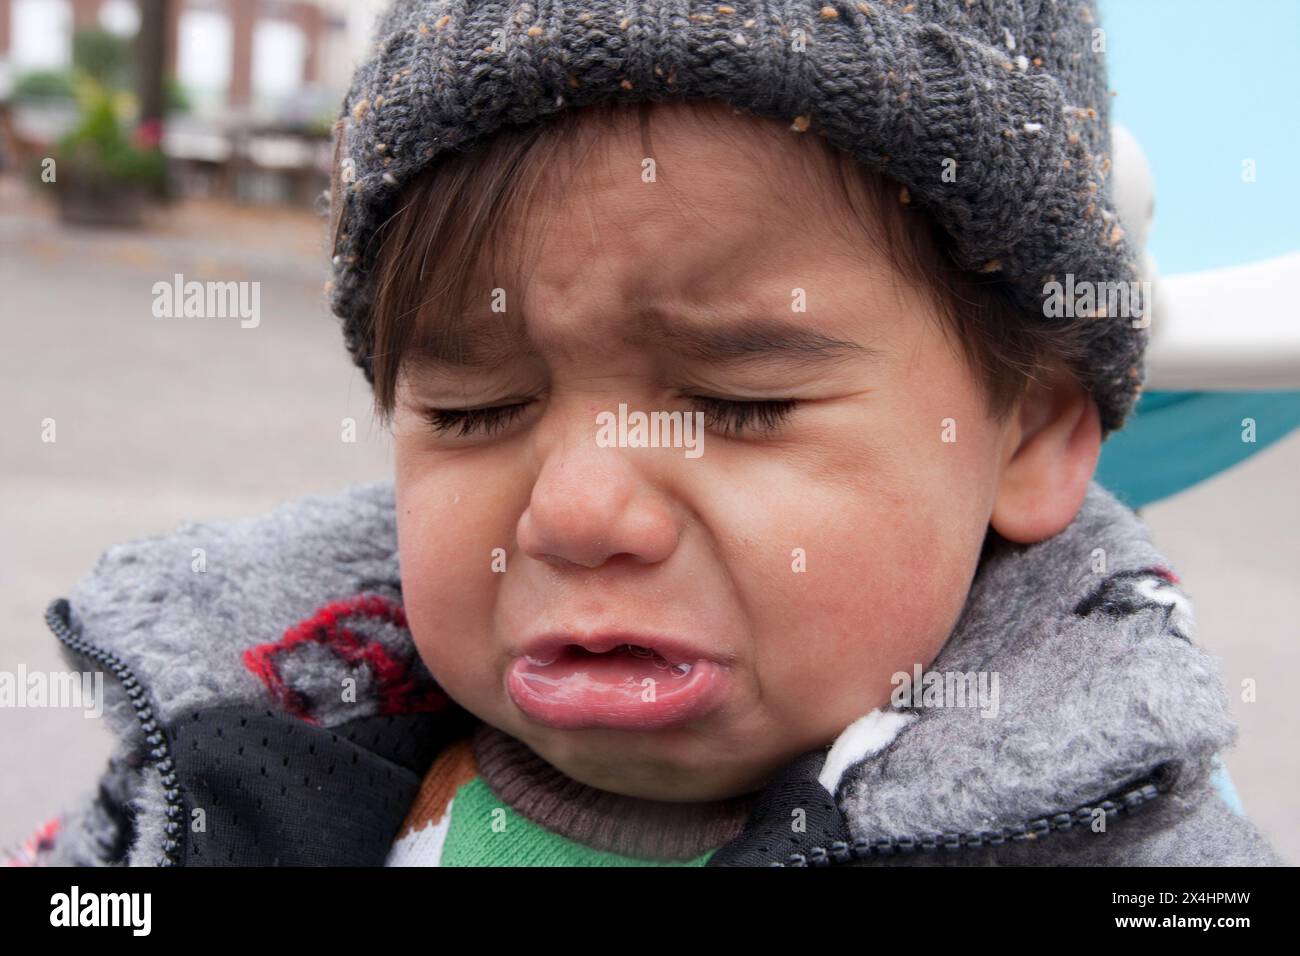 toddler in woolly hat crying, throwing tantrum Stock Photo